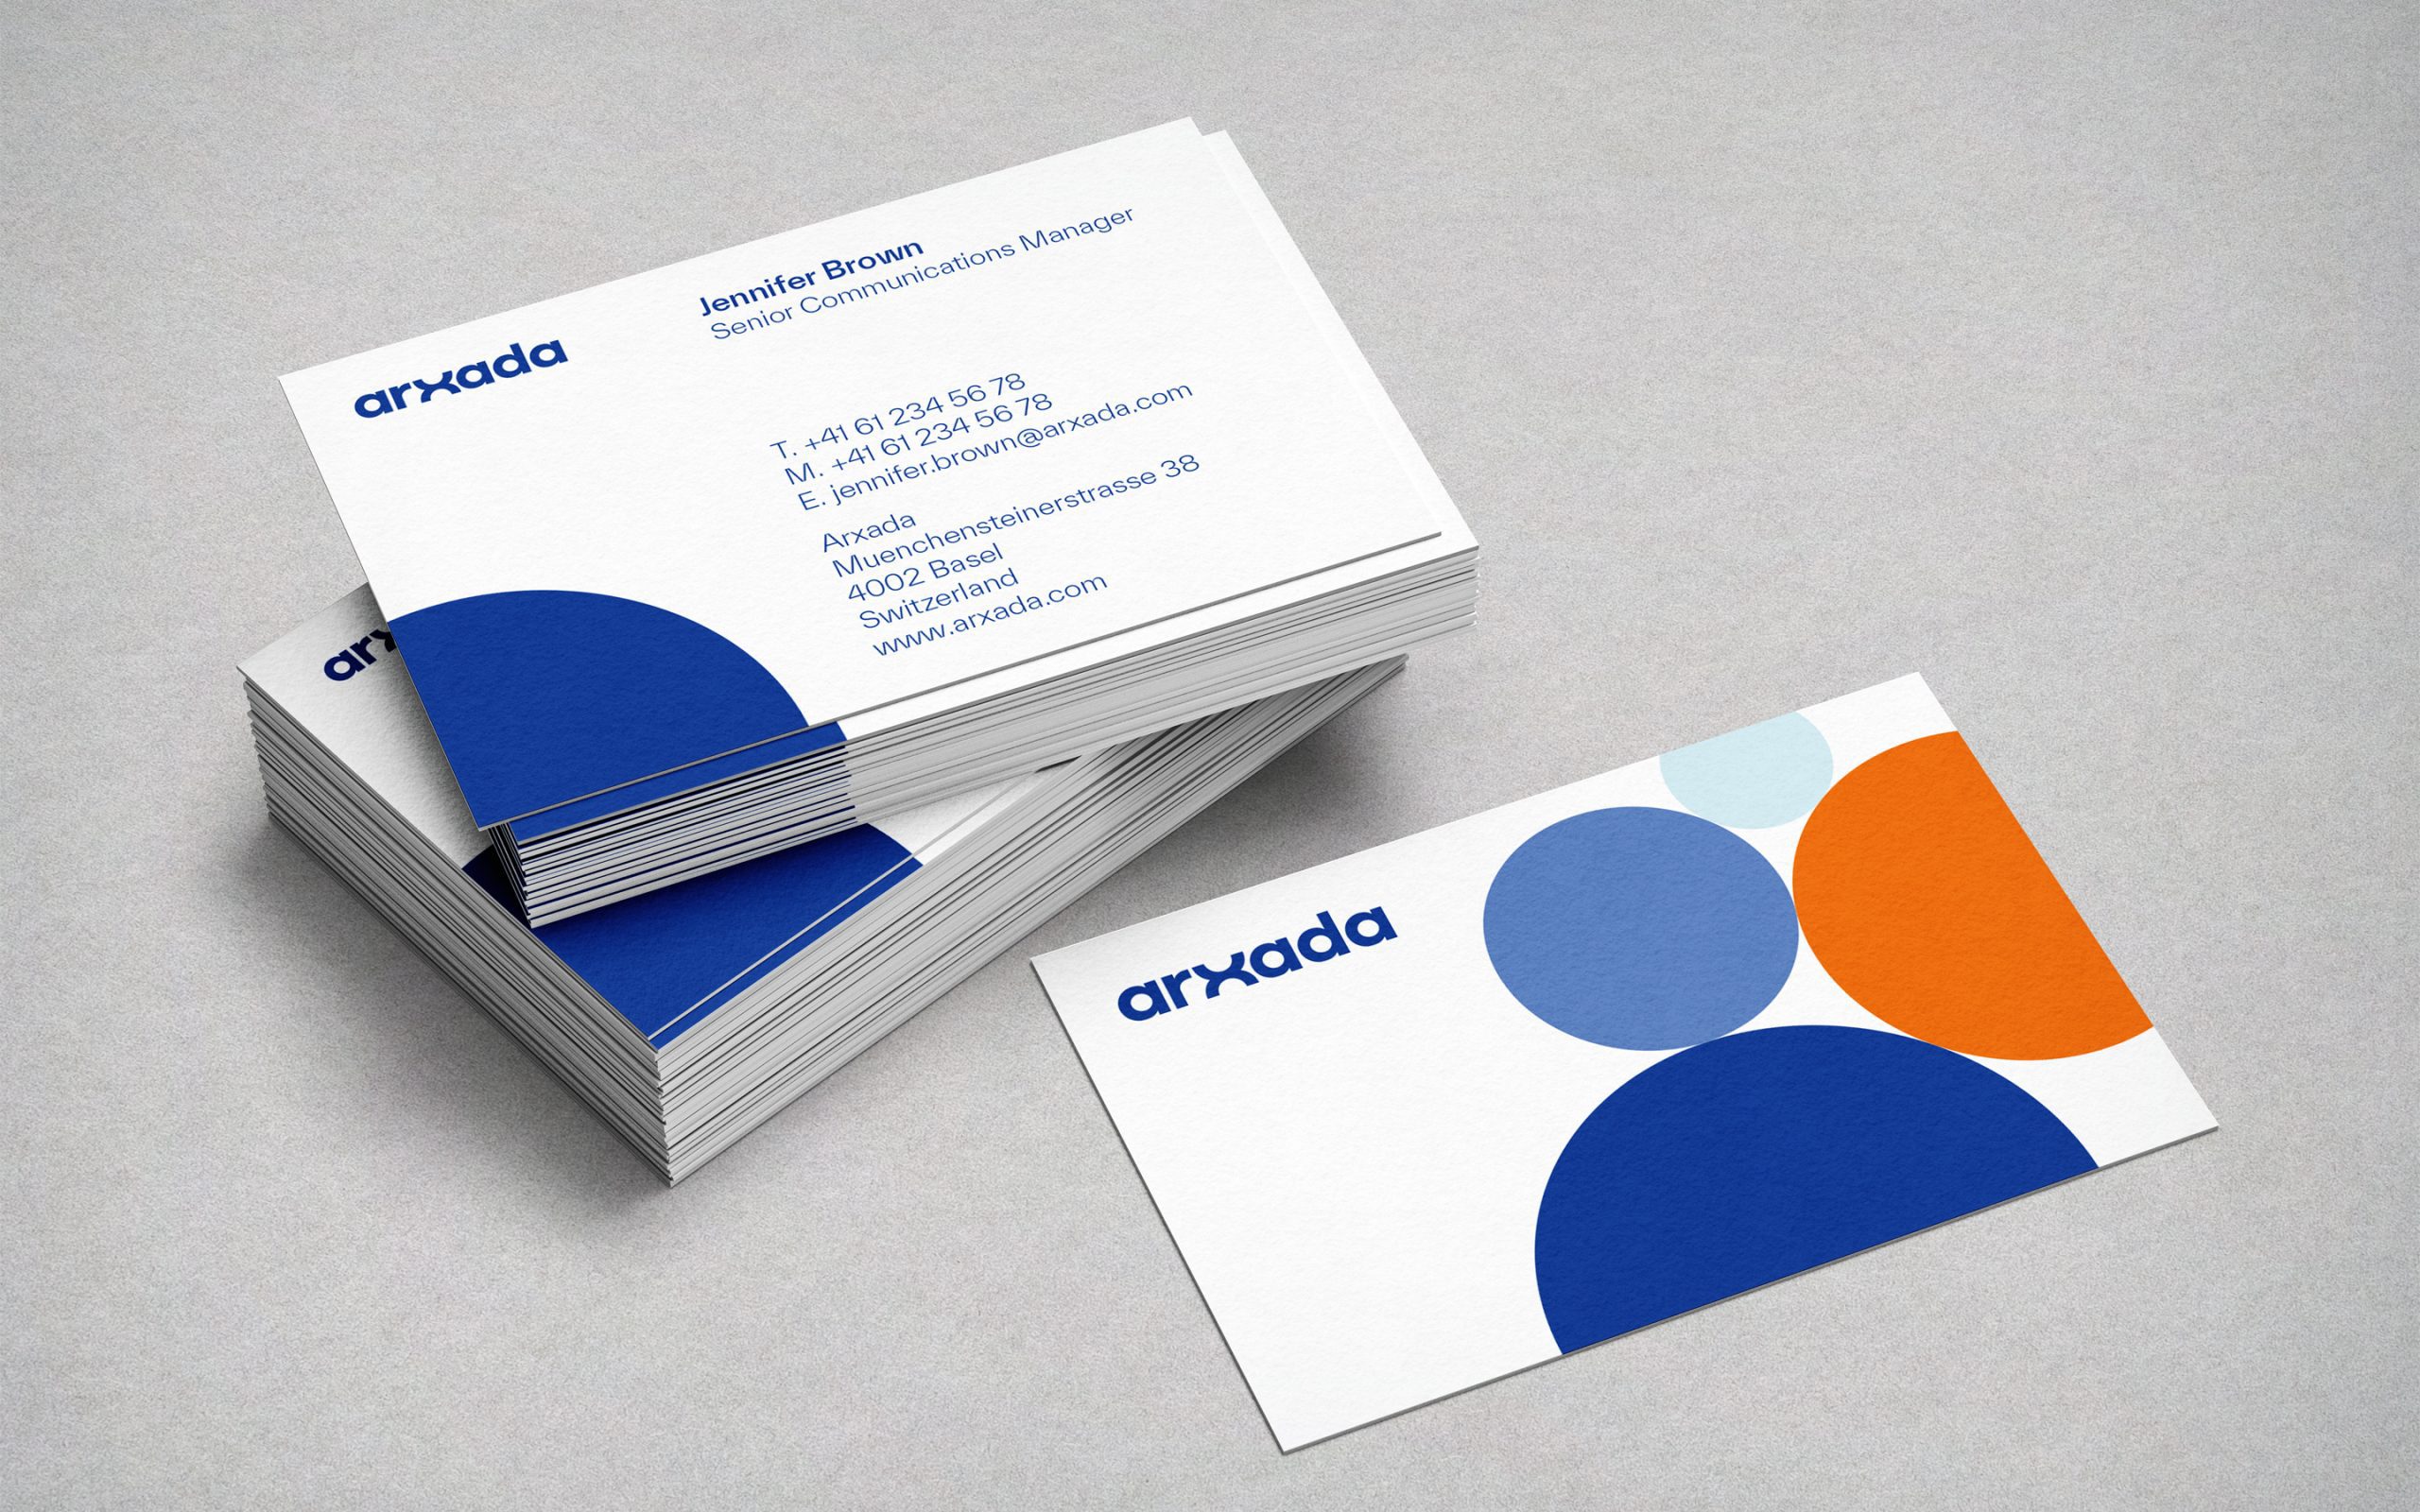 Arxada business card examples.